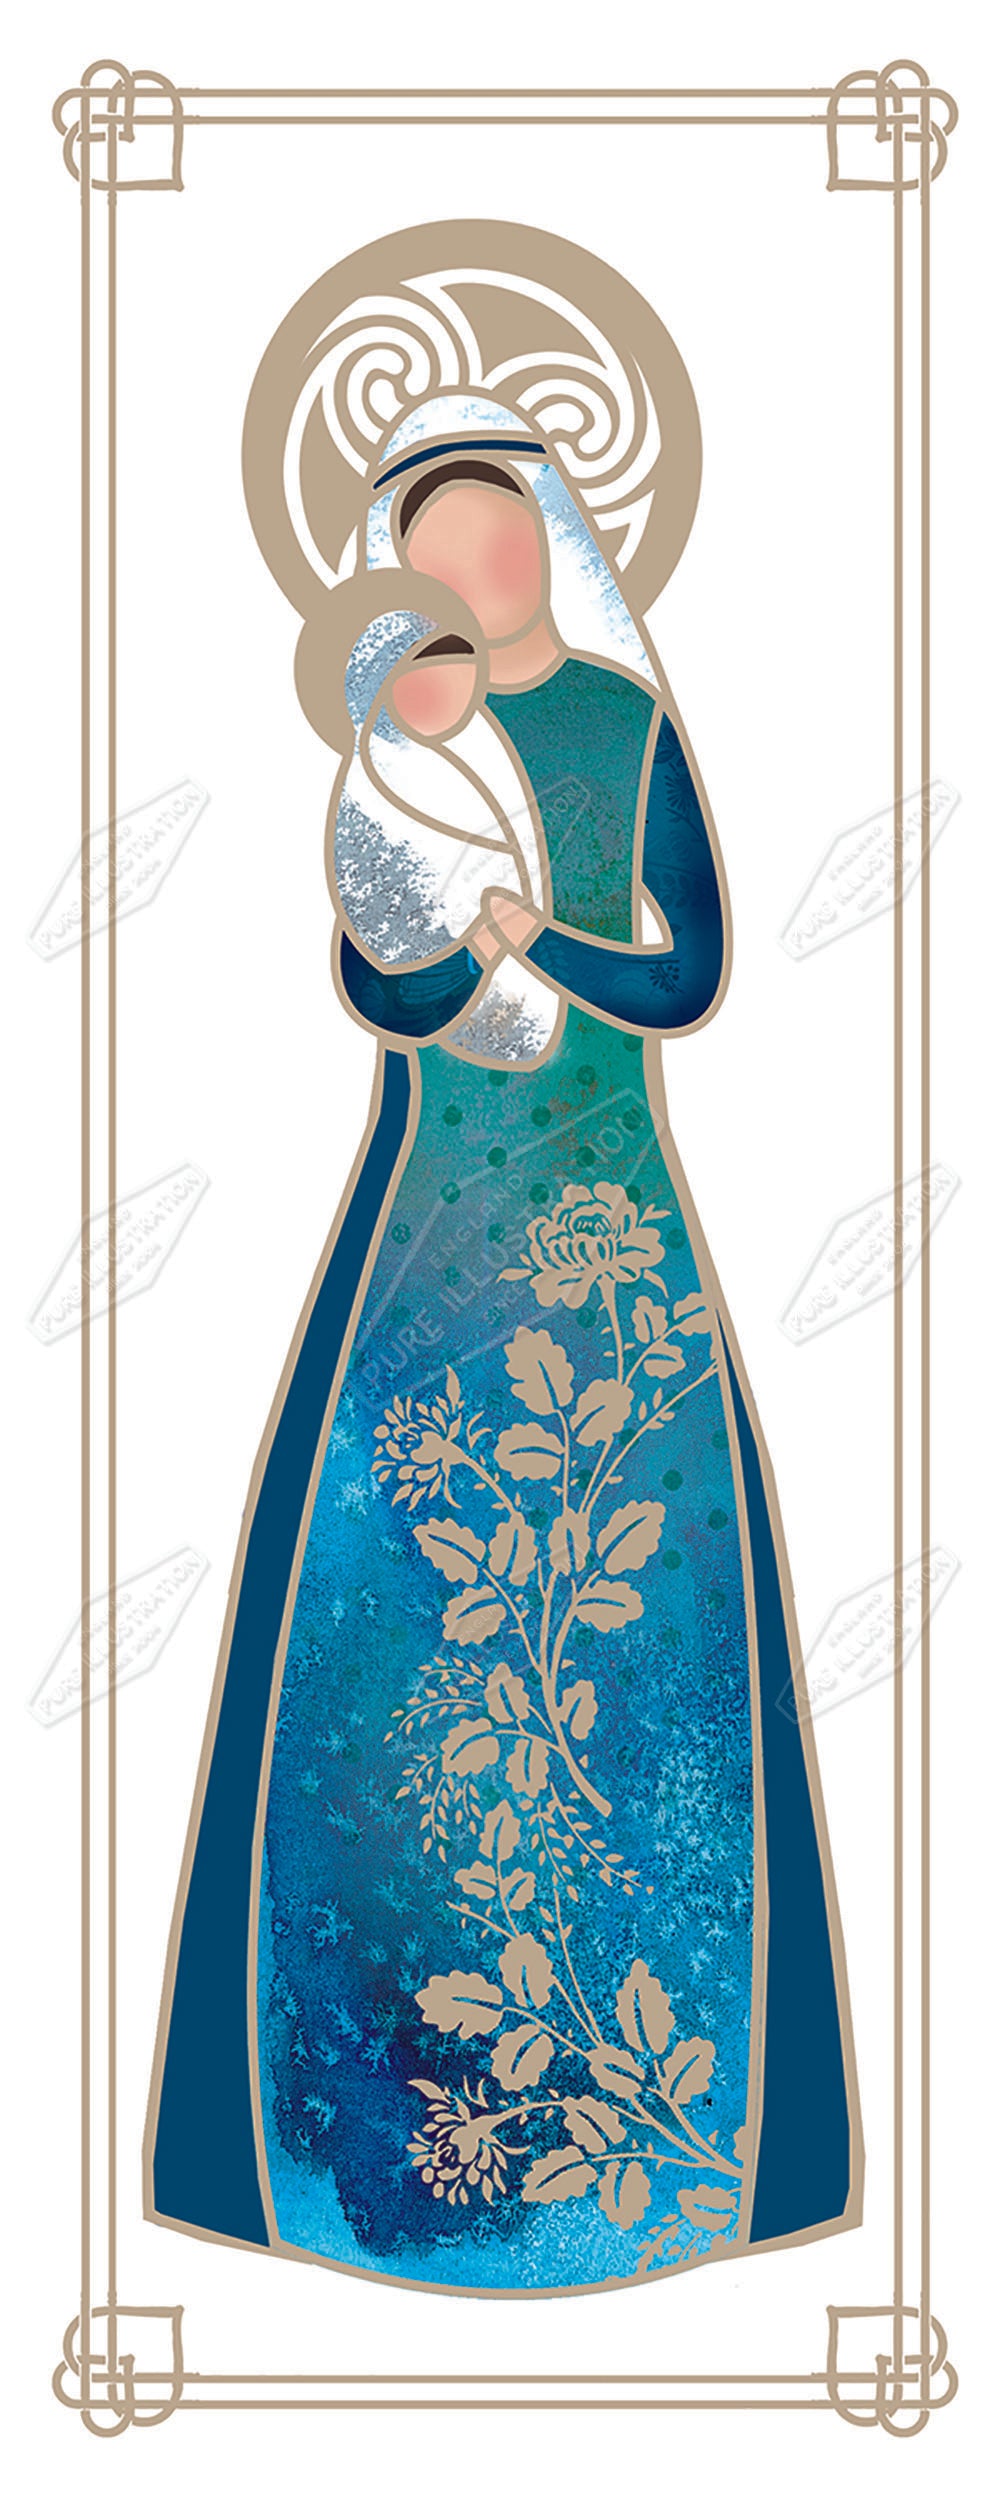 00025818DEV - Deva Evans is represented by Pure Art Licensing Agency - Christmas Greeting Card Design